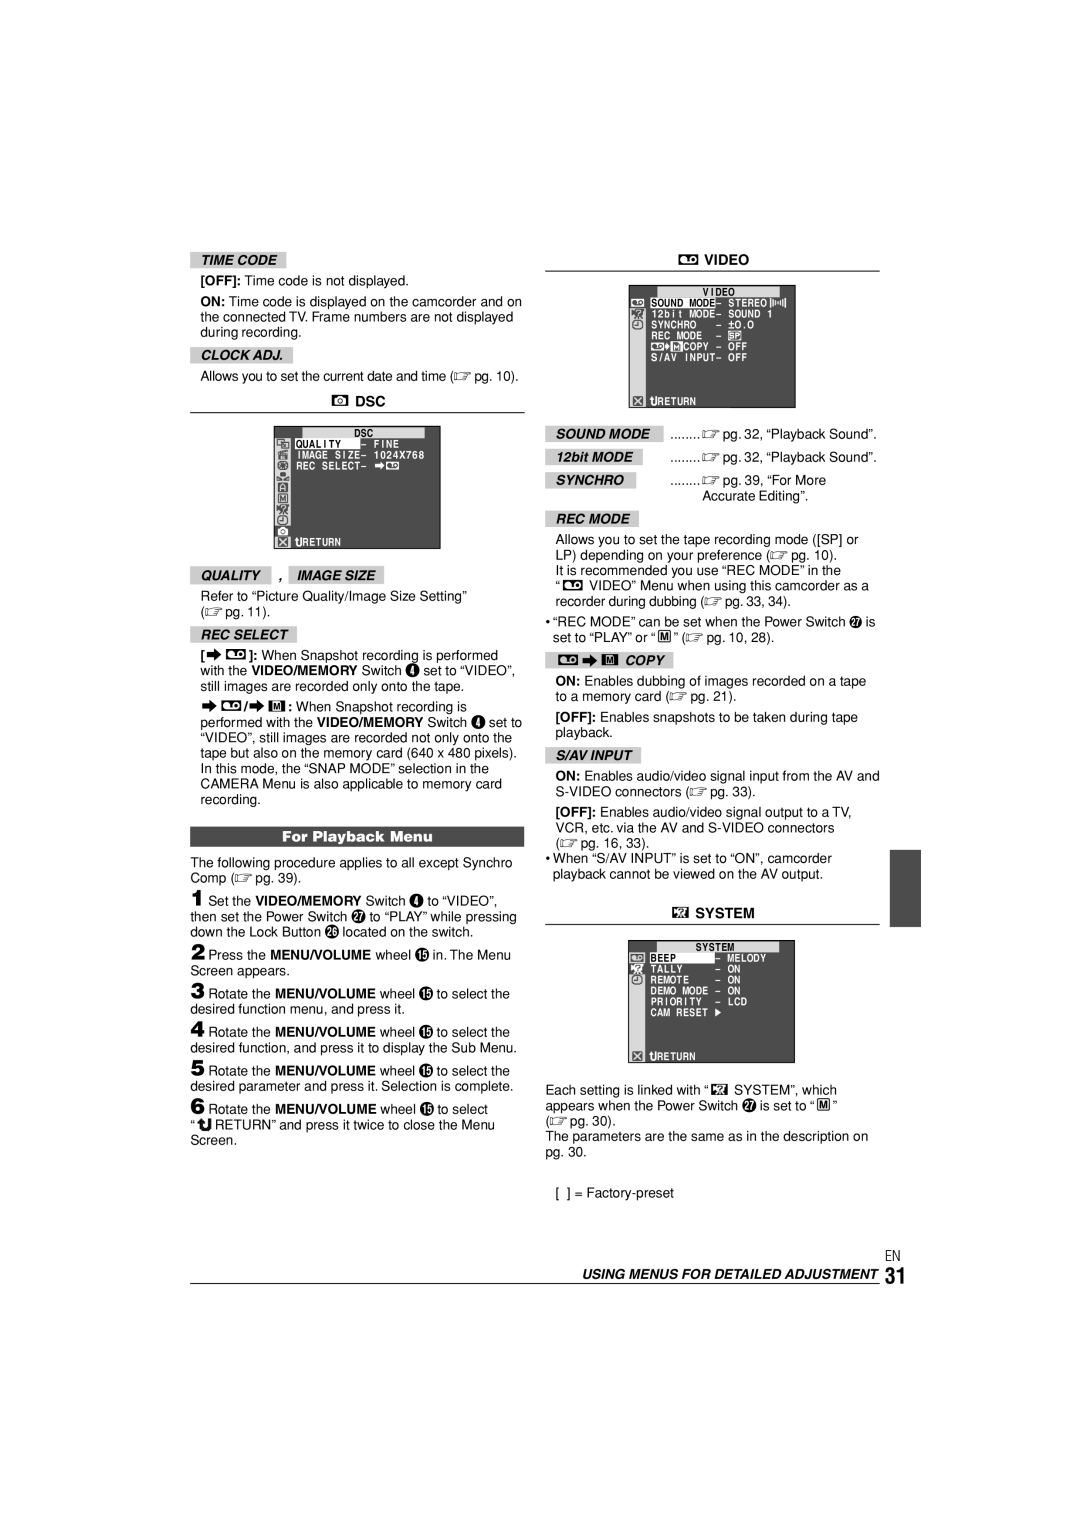 JVC GR-D90 GR-D70 instruction manual For Playback Menu, When Snapshot recording is performed 